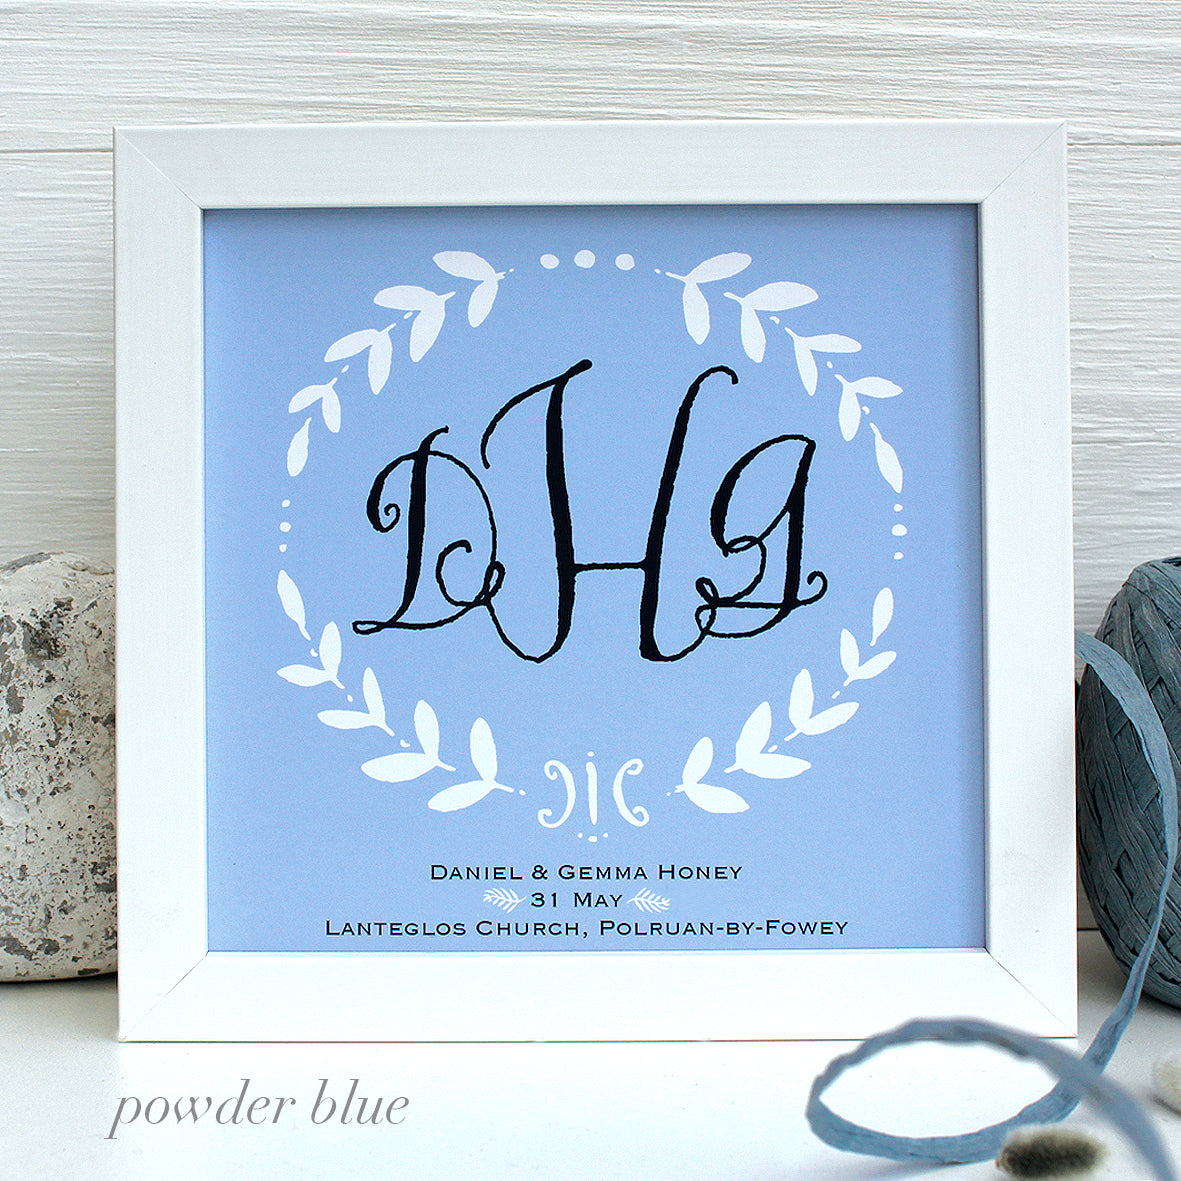 wedding gift monogram on a powder blue background with white wooden frame